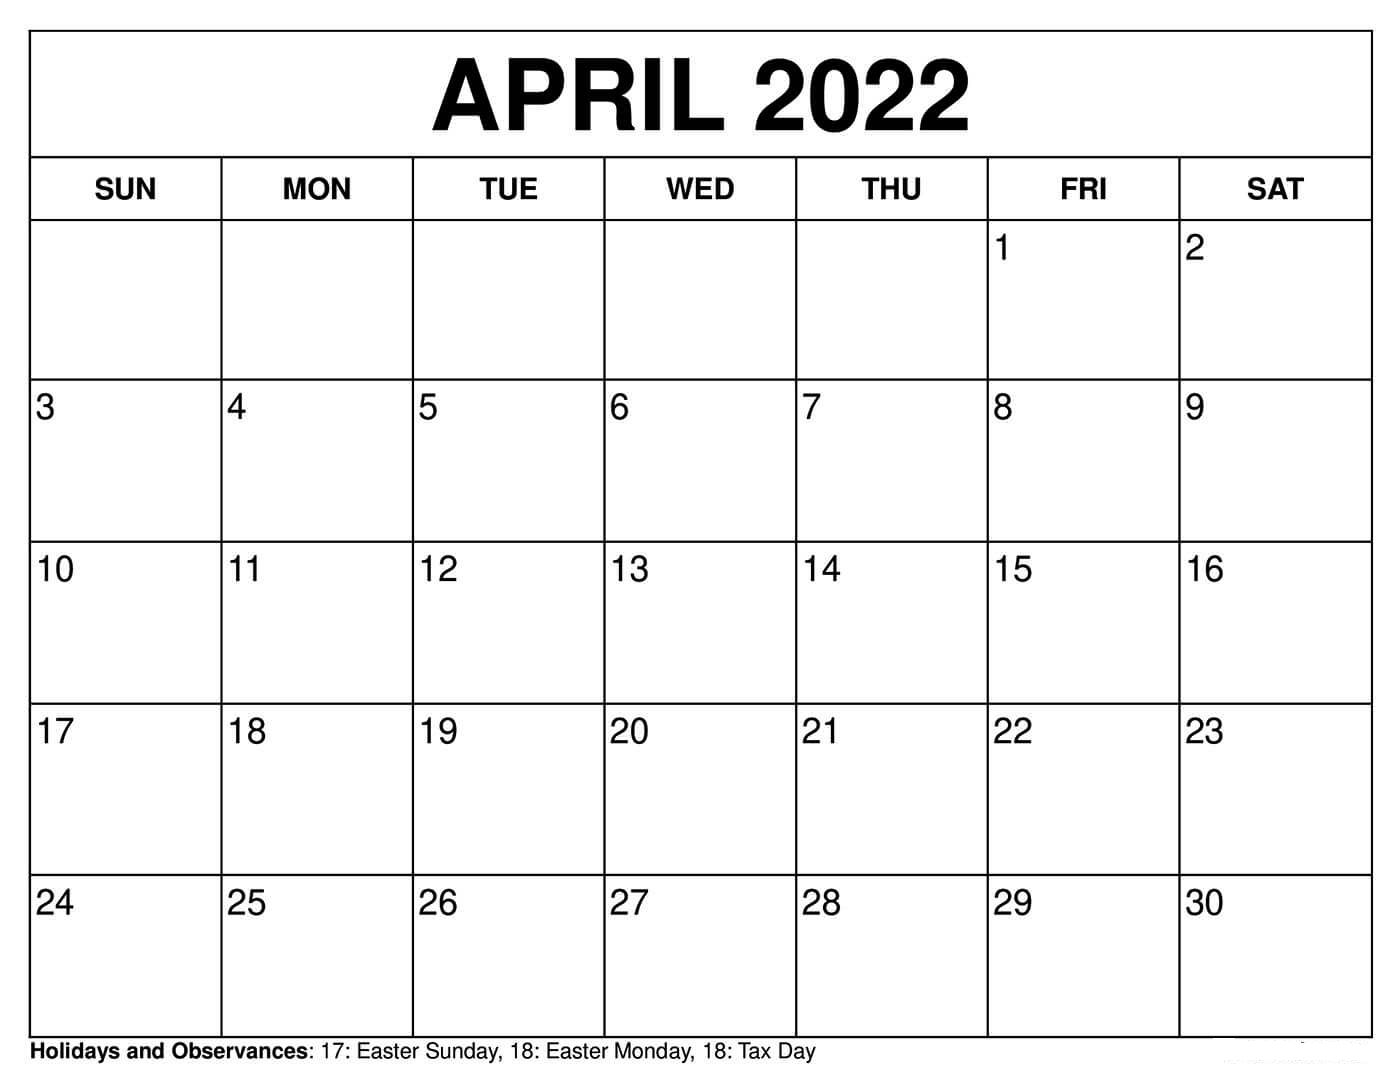 April 2022 Calendar With Holidays Template - Free Us Calendar